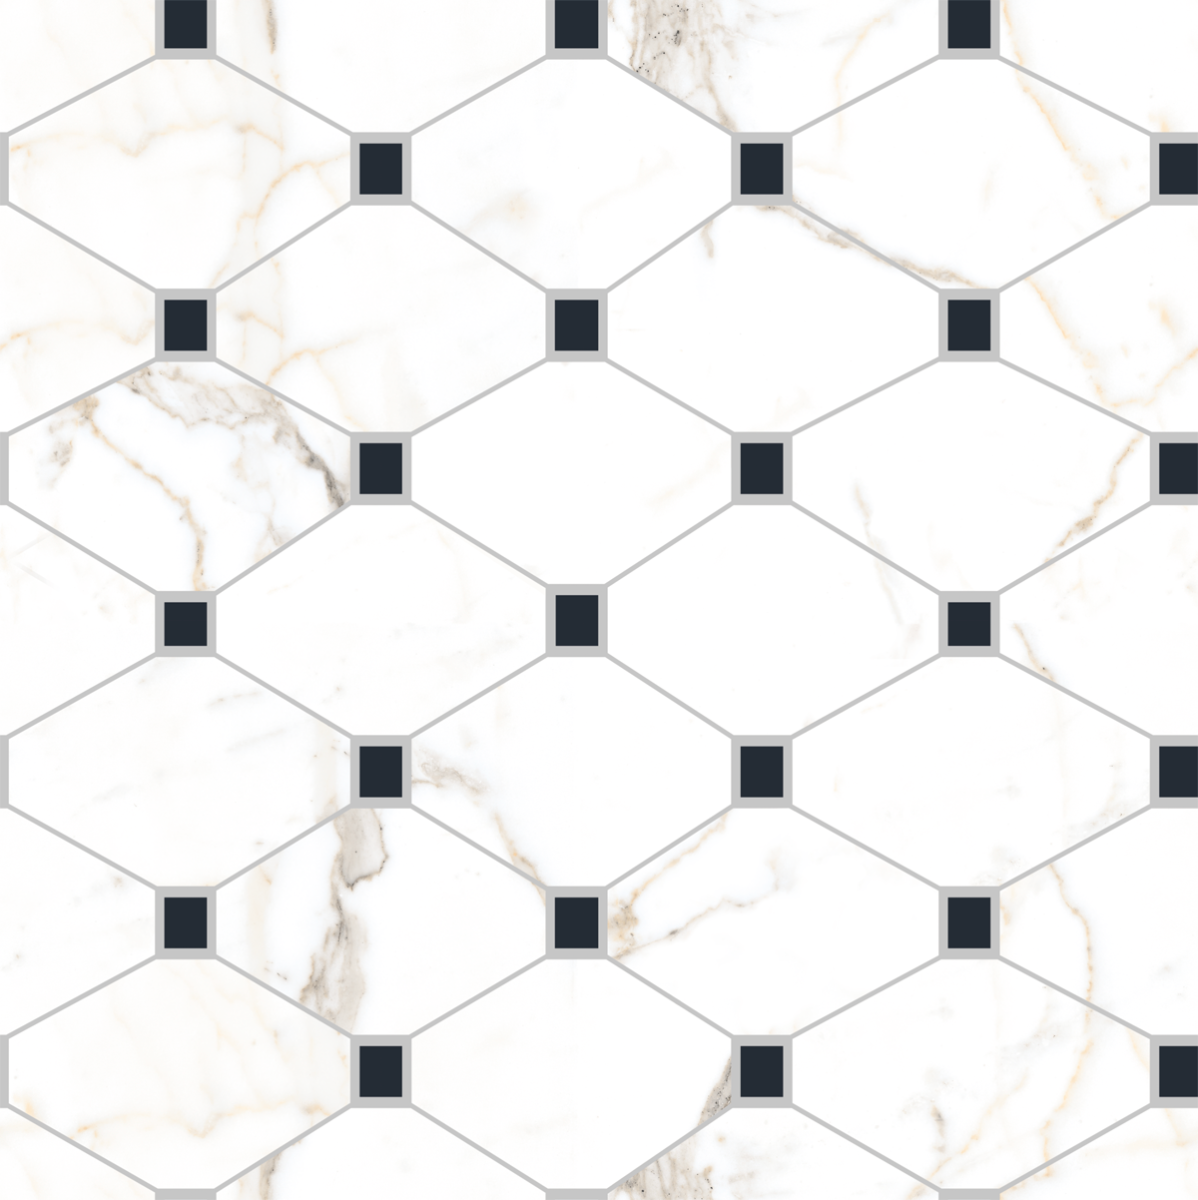 Porcelain Tiles for Living Room Tiles, Kitchen Tiles, Bedroom Tiles, Accent Tiles, Office Tiles, Bar Tiles, Restaurant Tiles, Hospital Tiles, Bar/Restaurant, Commercial/Office